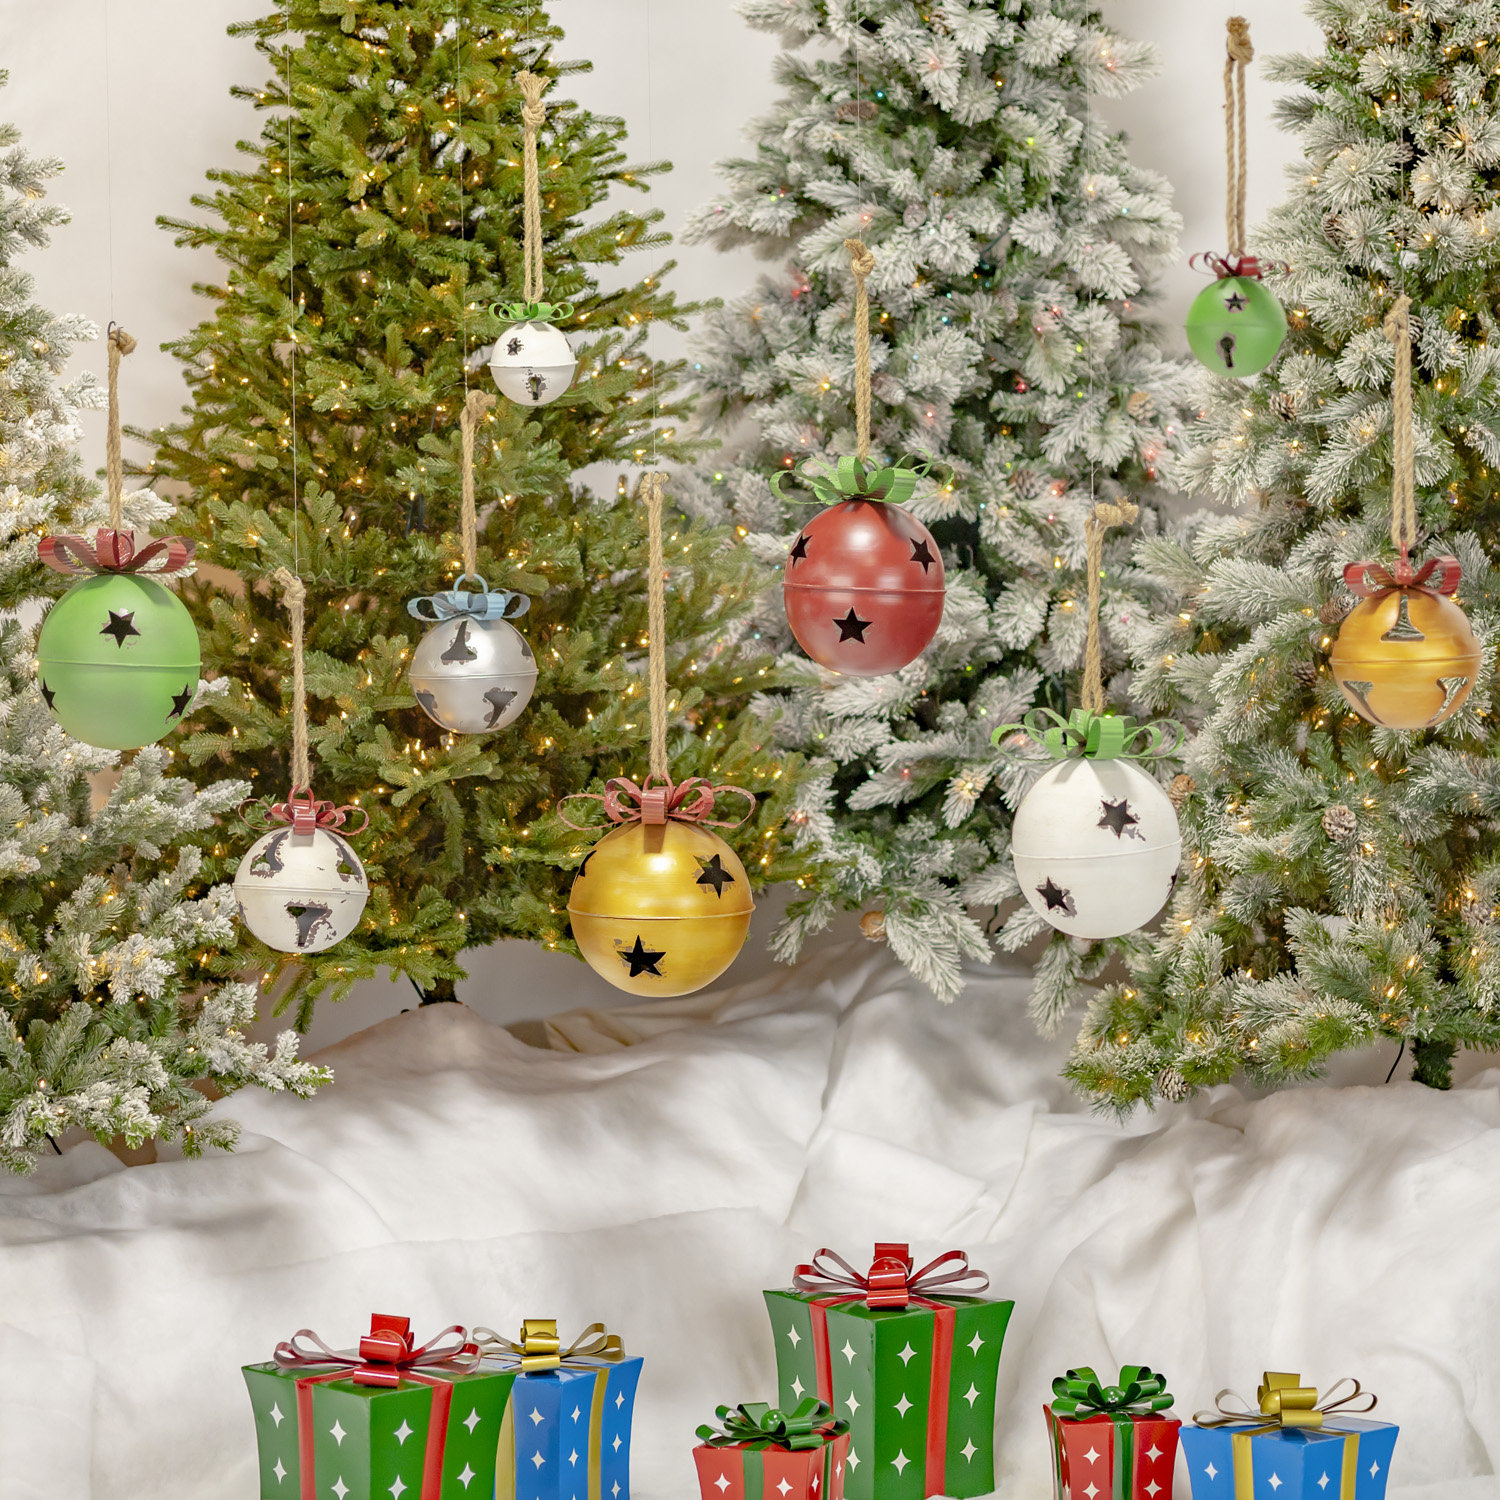 Mini Christmas Ornaments Set Christmas Tree Decorations DIY Charm Jewelry  28 pcs